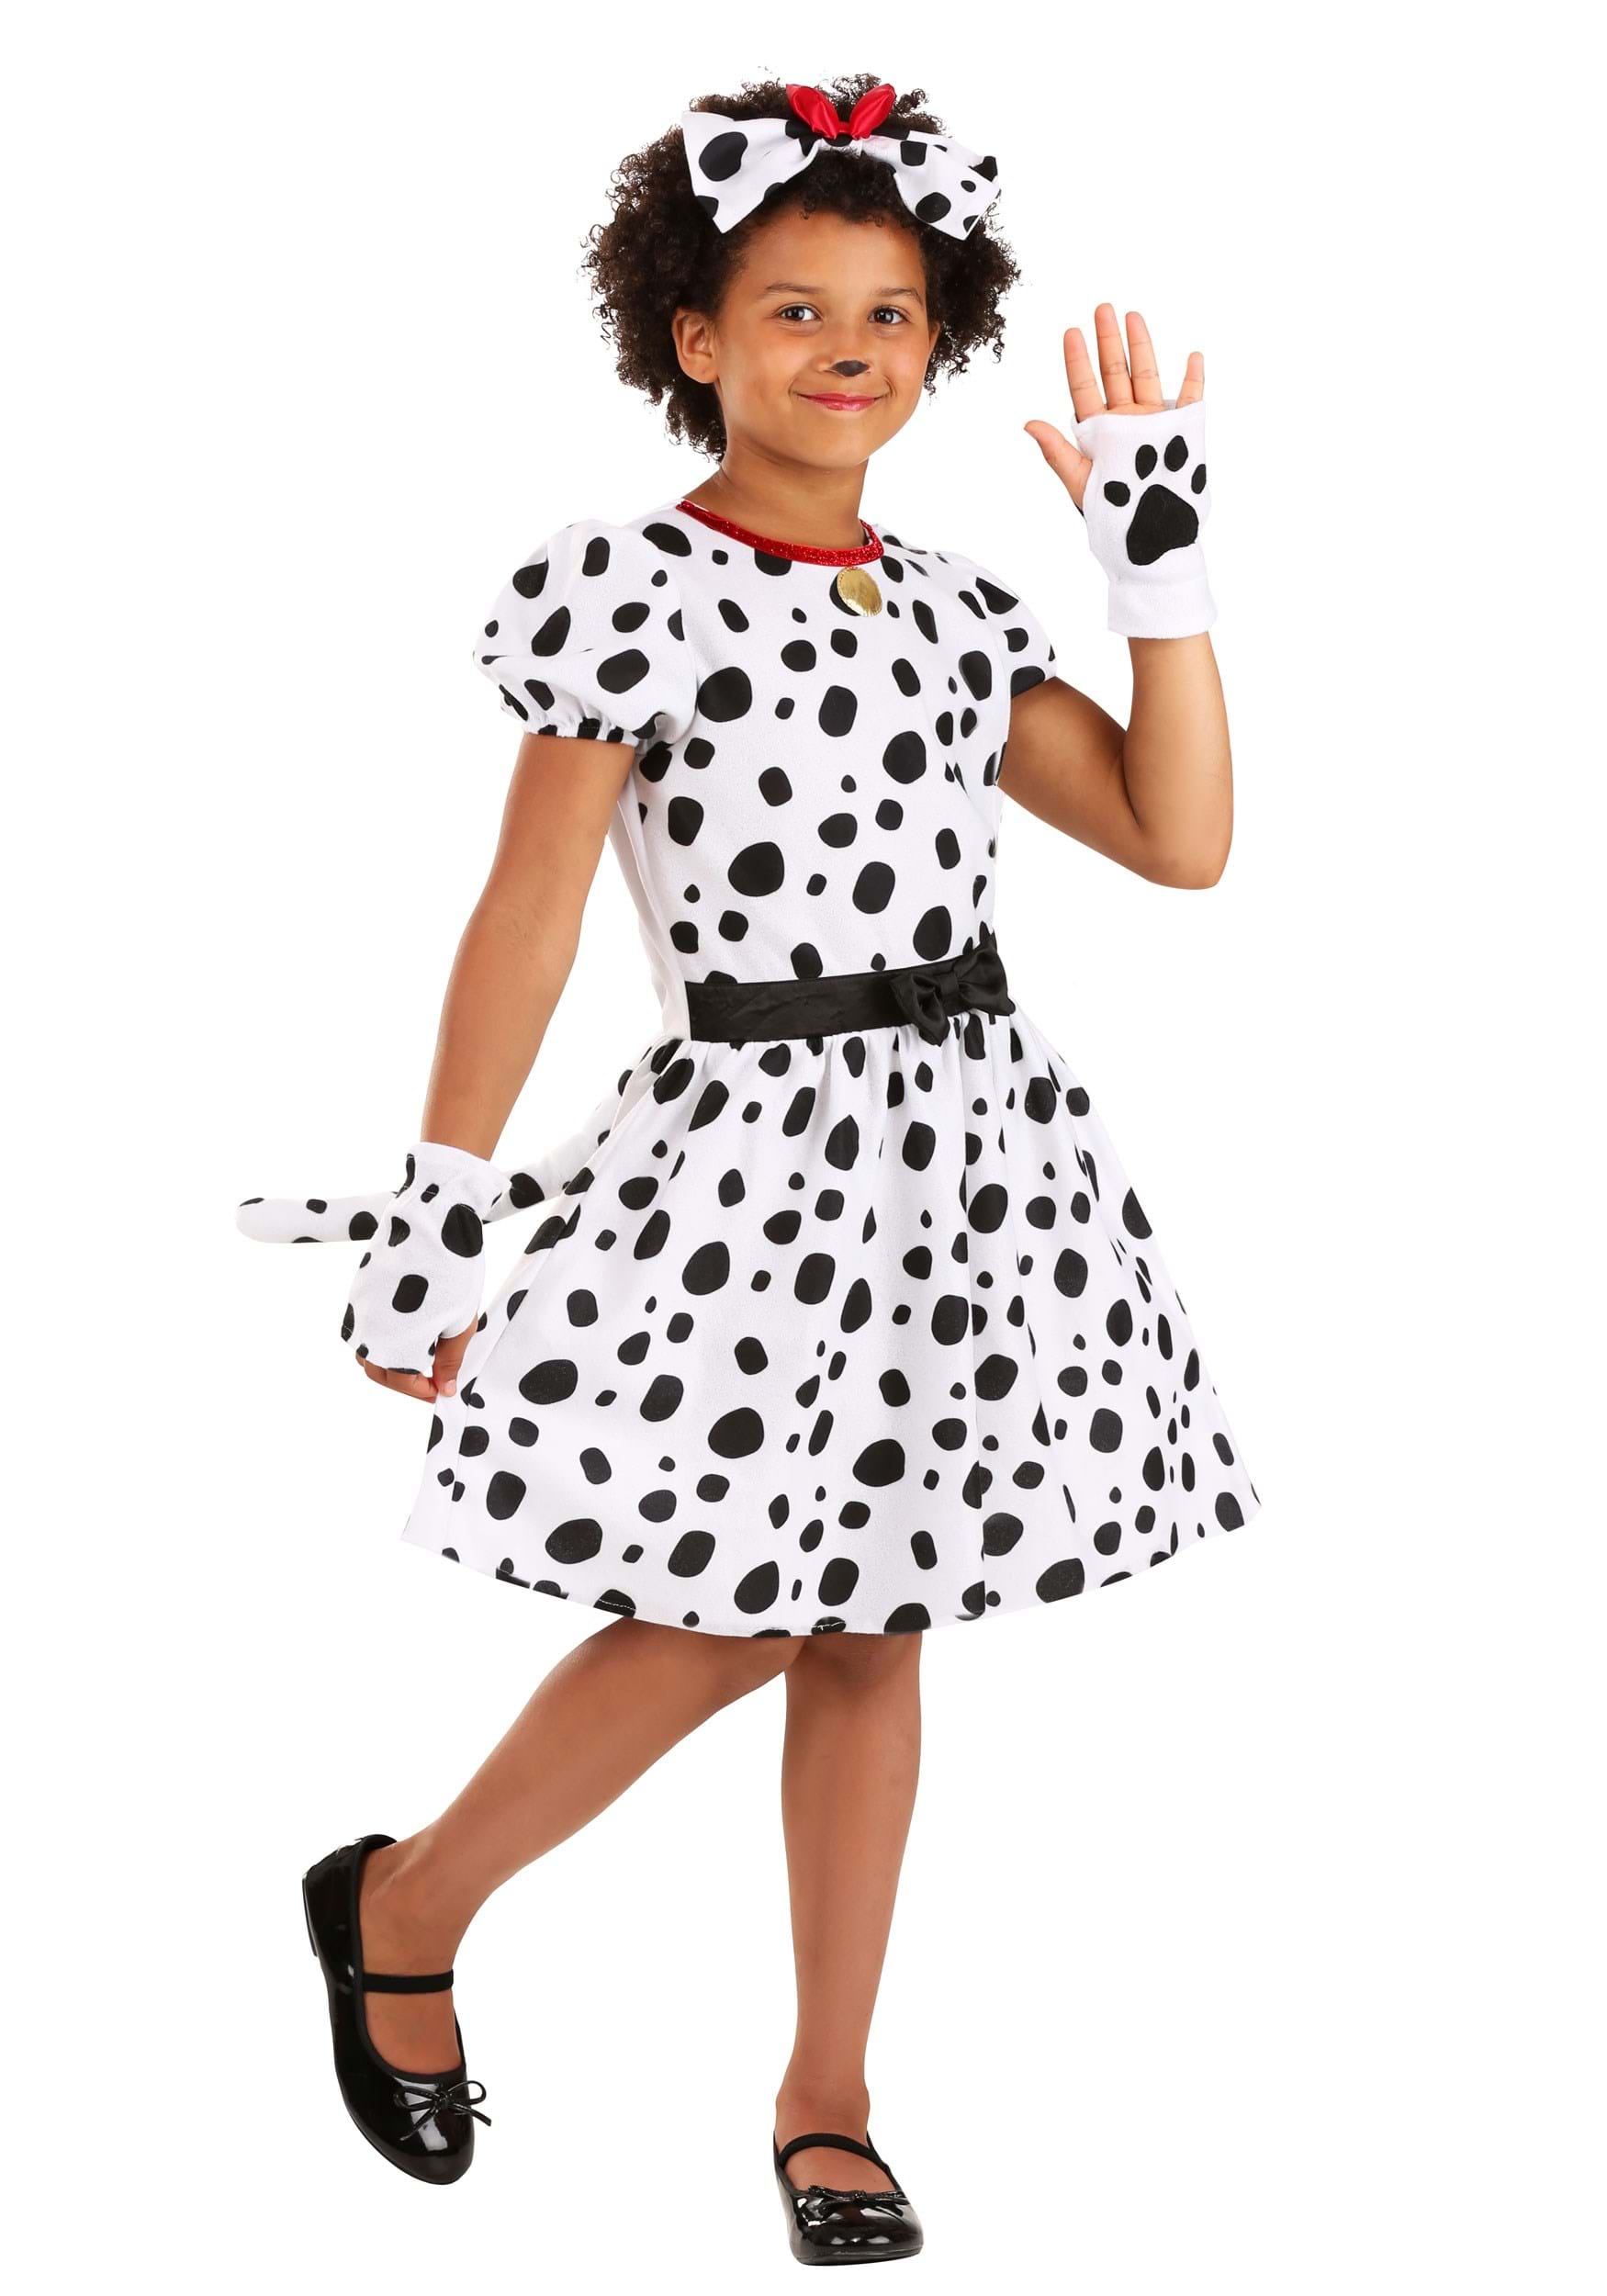 Photos - Fancy Dress Winsun Dress FUN Costumes Dalmatian Dress Kid's Costume Black/Red/White FUN1687 